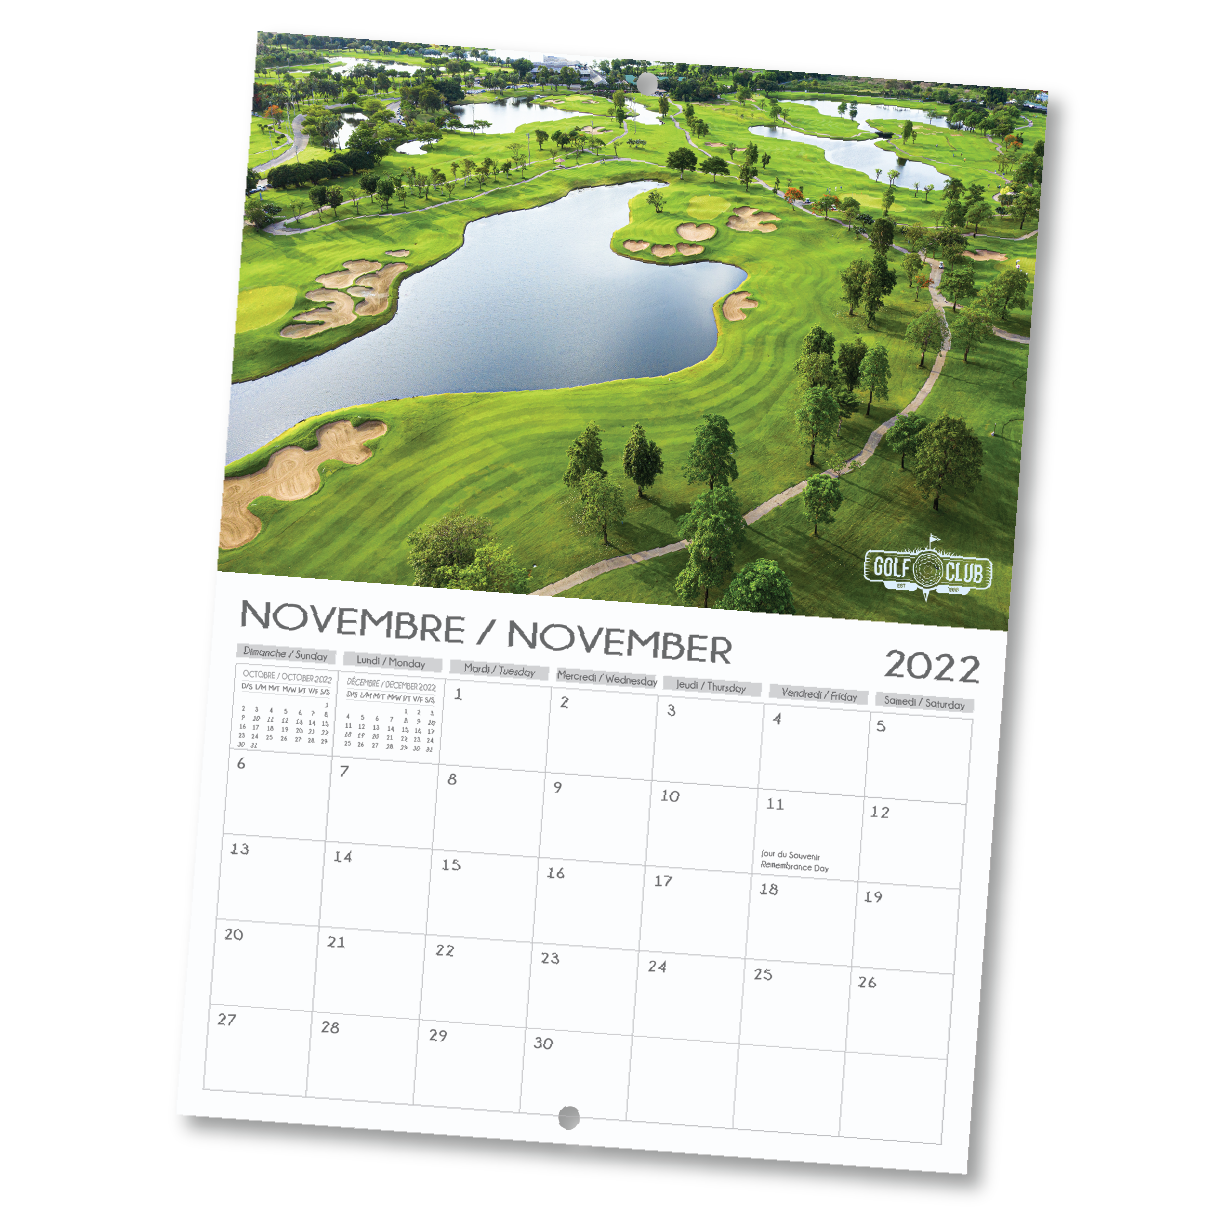 jan ksu euro unt calendar Customized Calendar 2022 print november